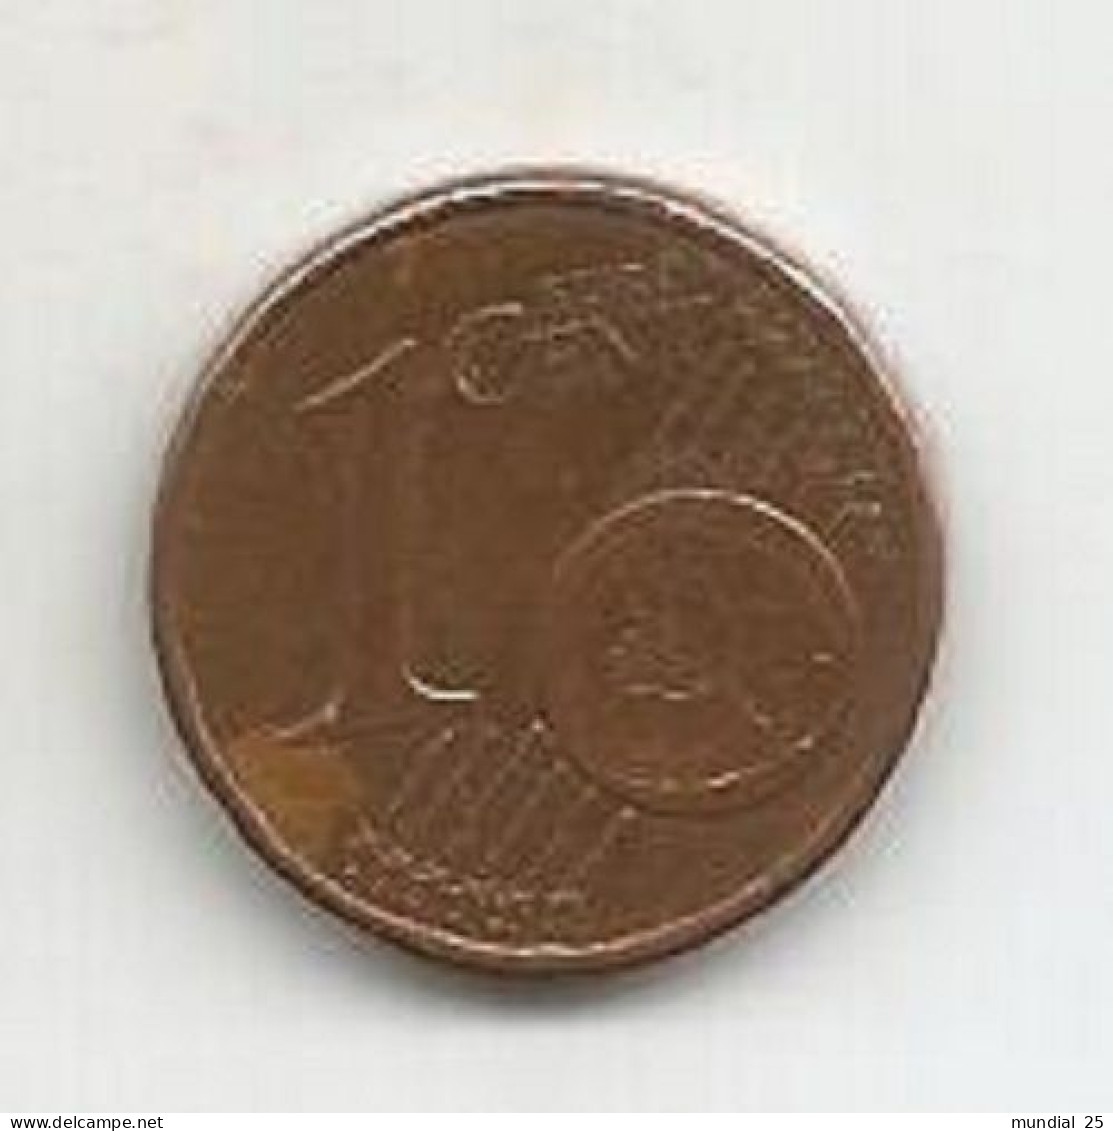 FRANCE 1 EURO CENT 2003 - France